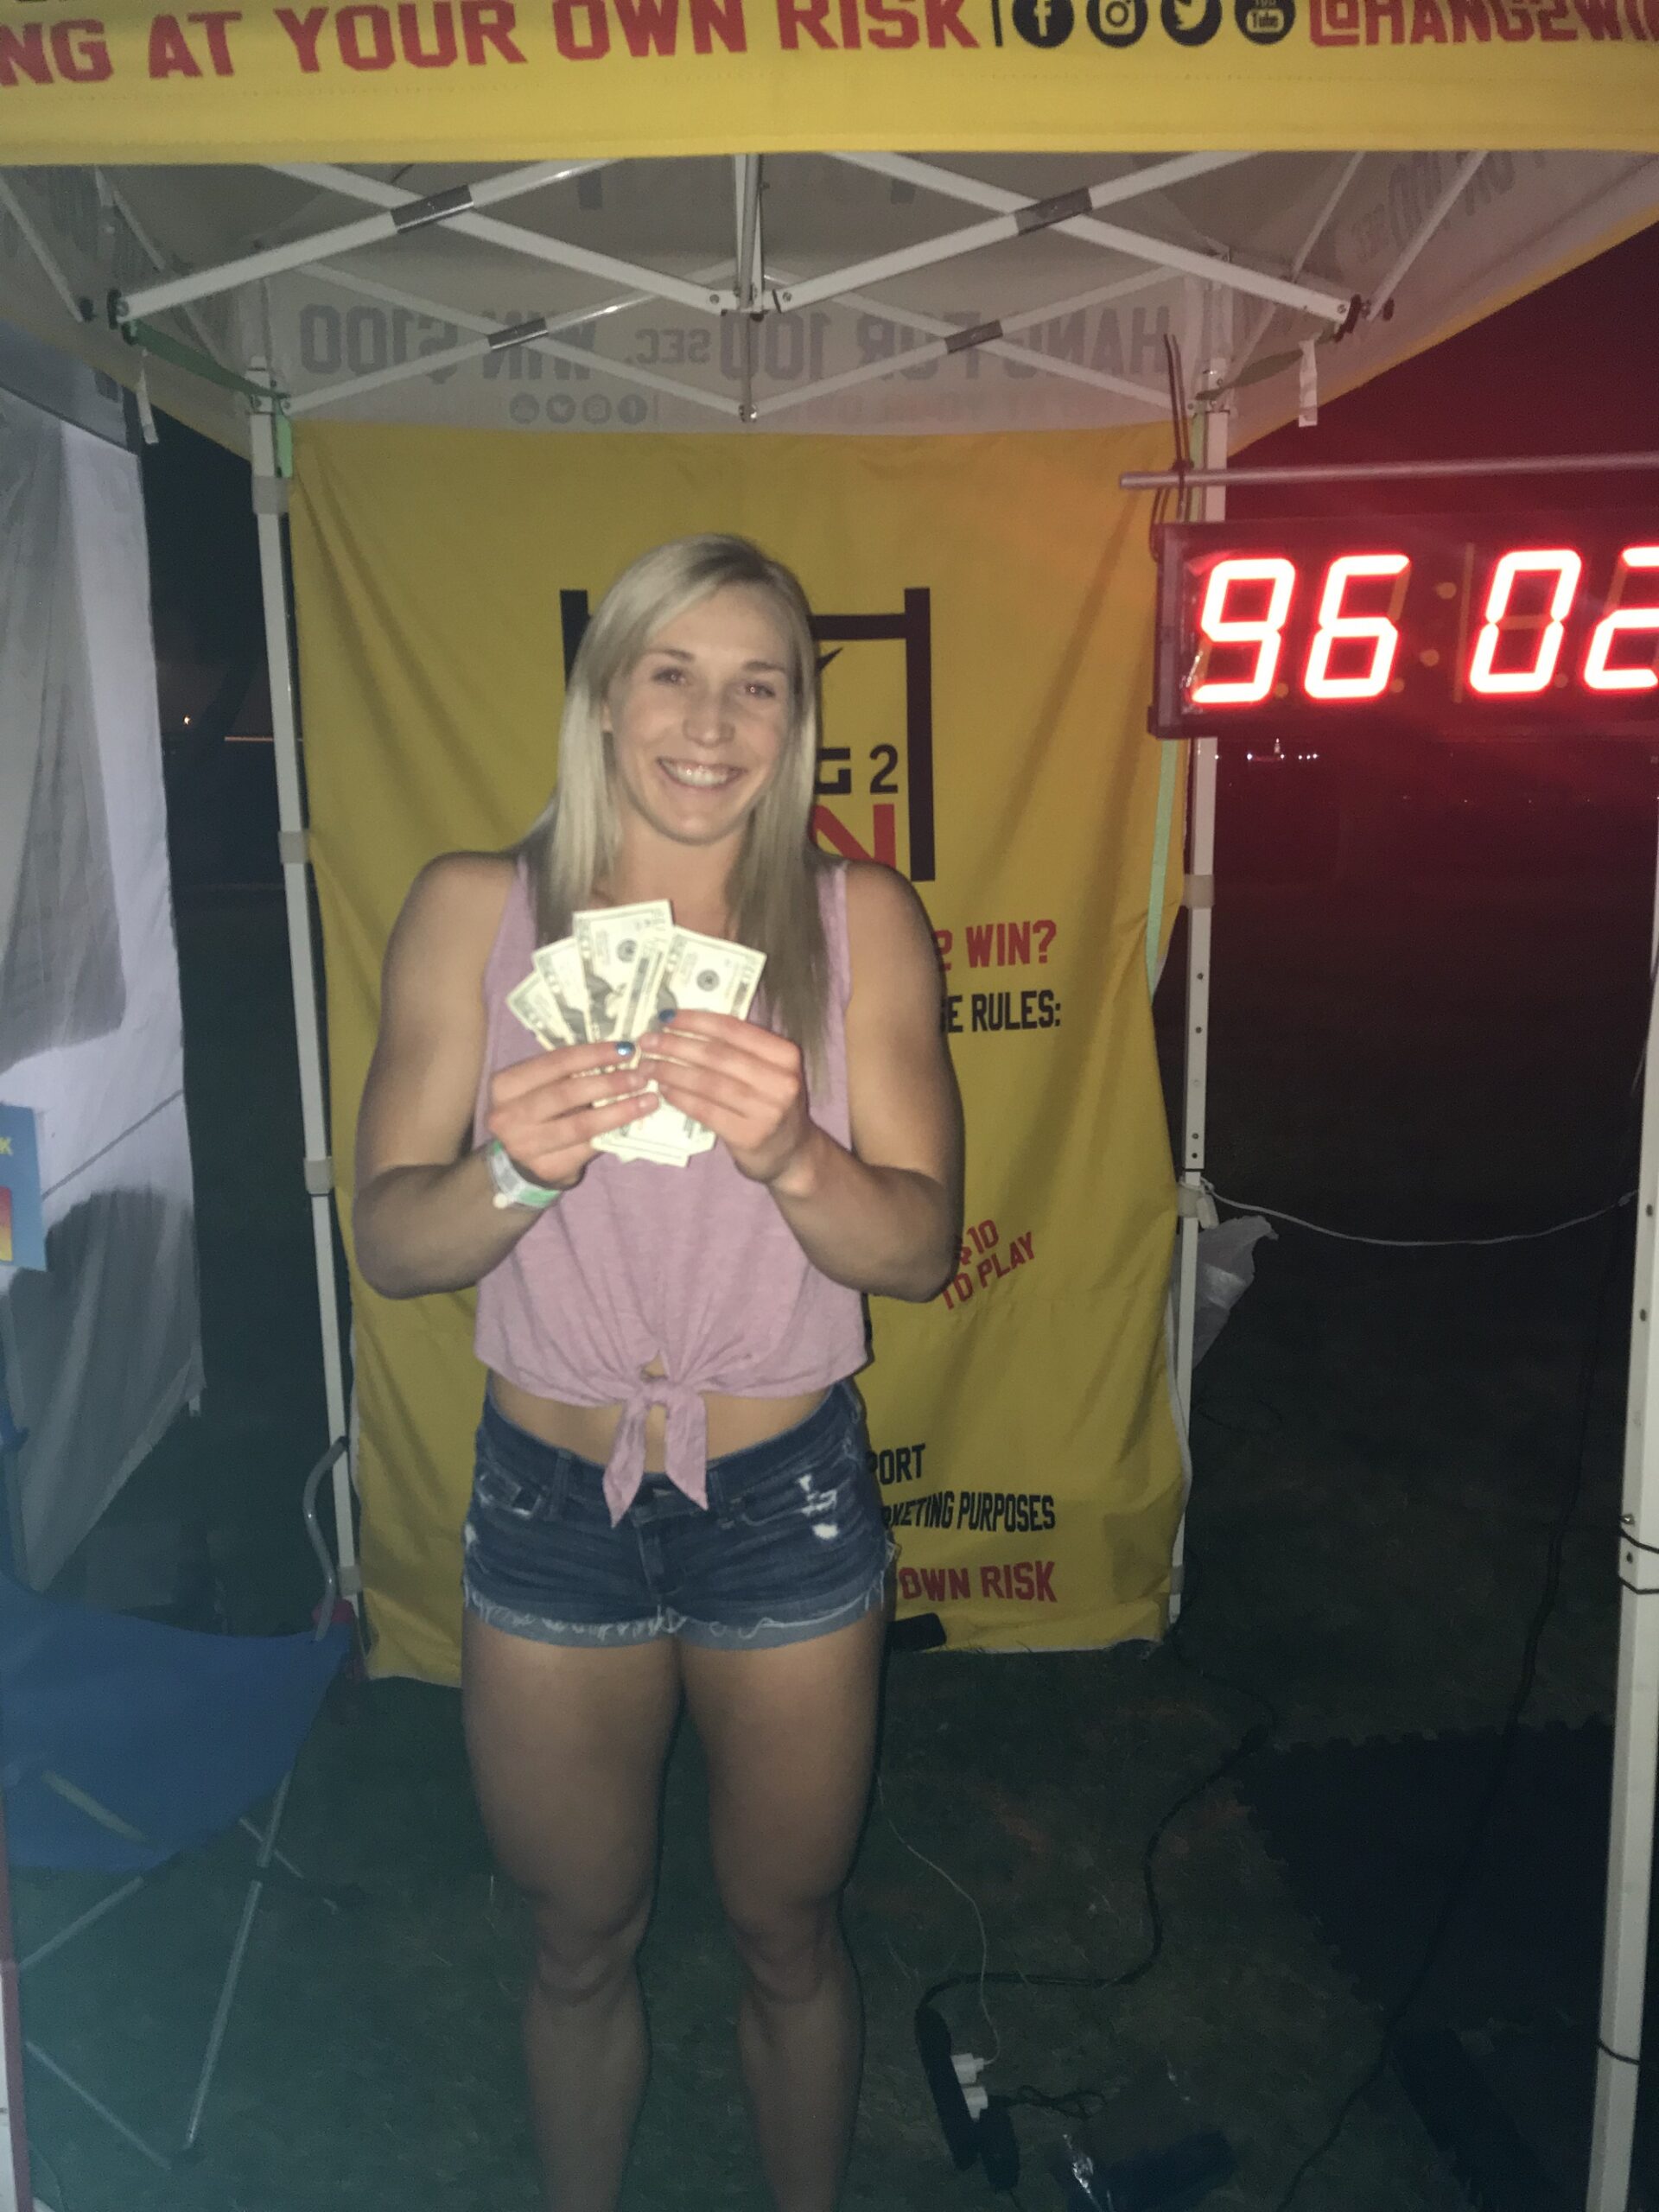 Female winner of the $100 rotating pull-up bar hang challenge